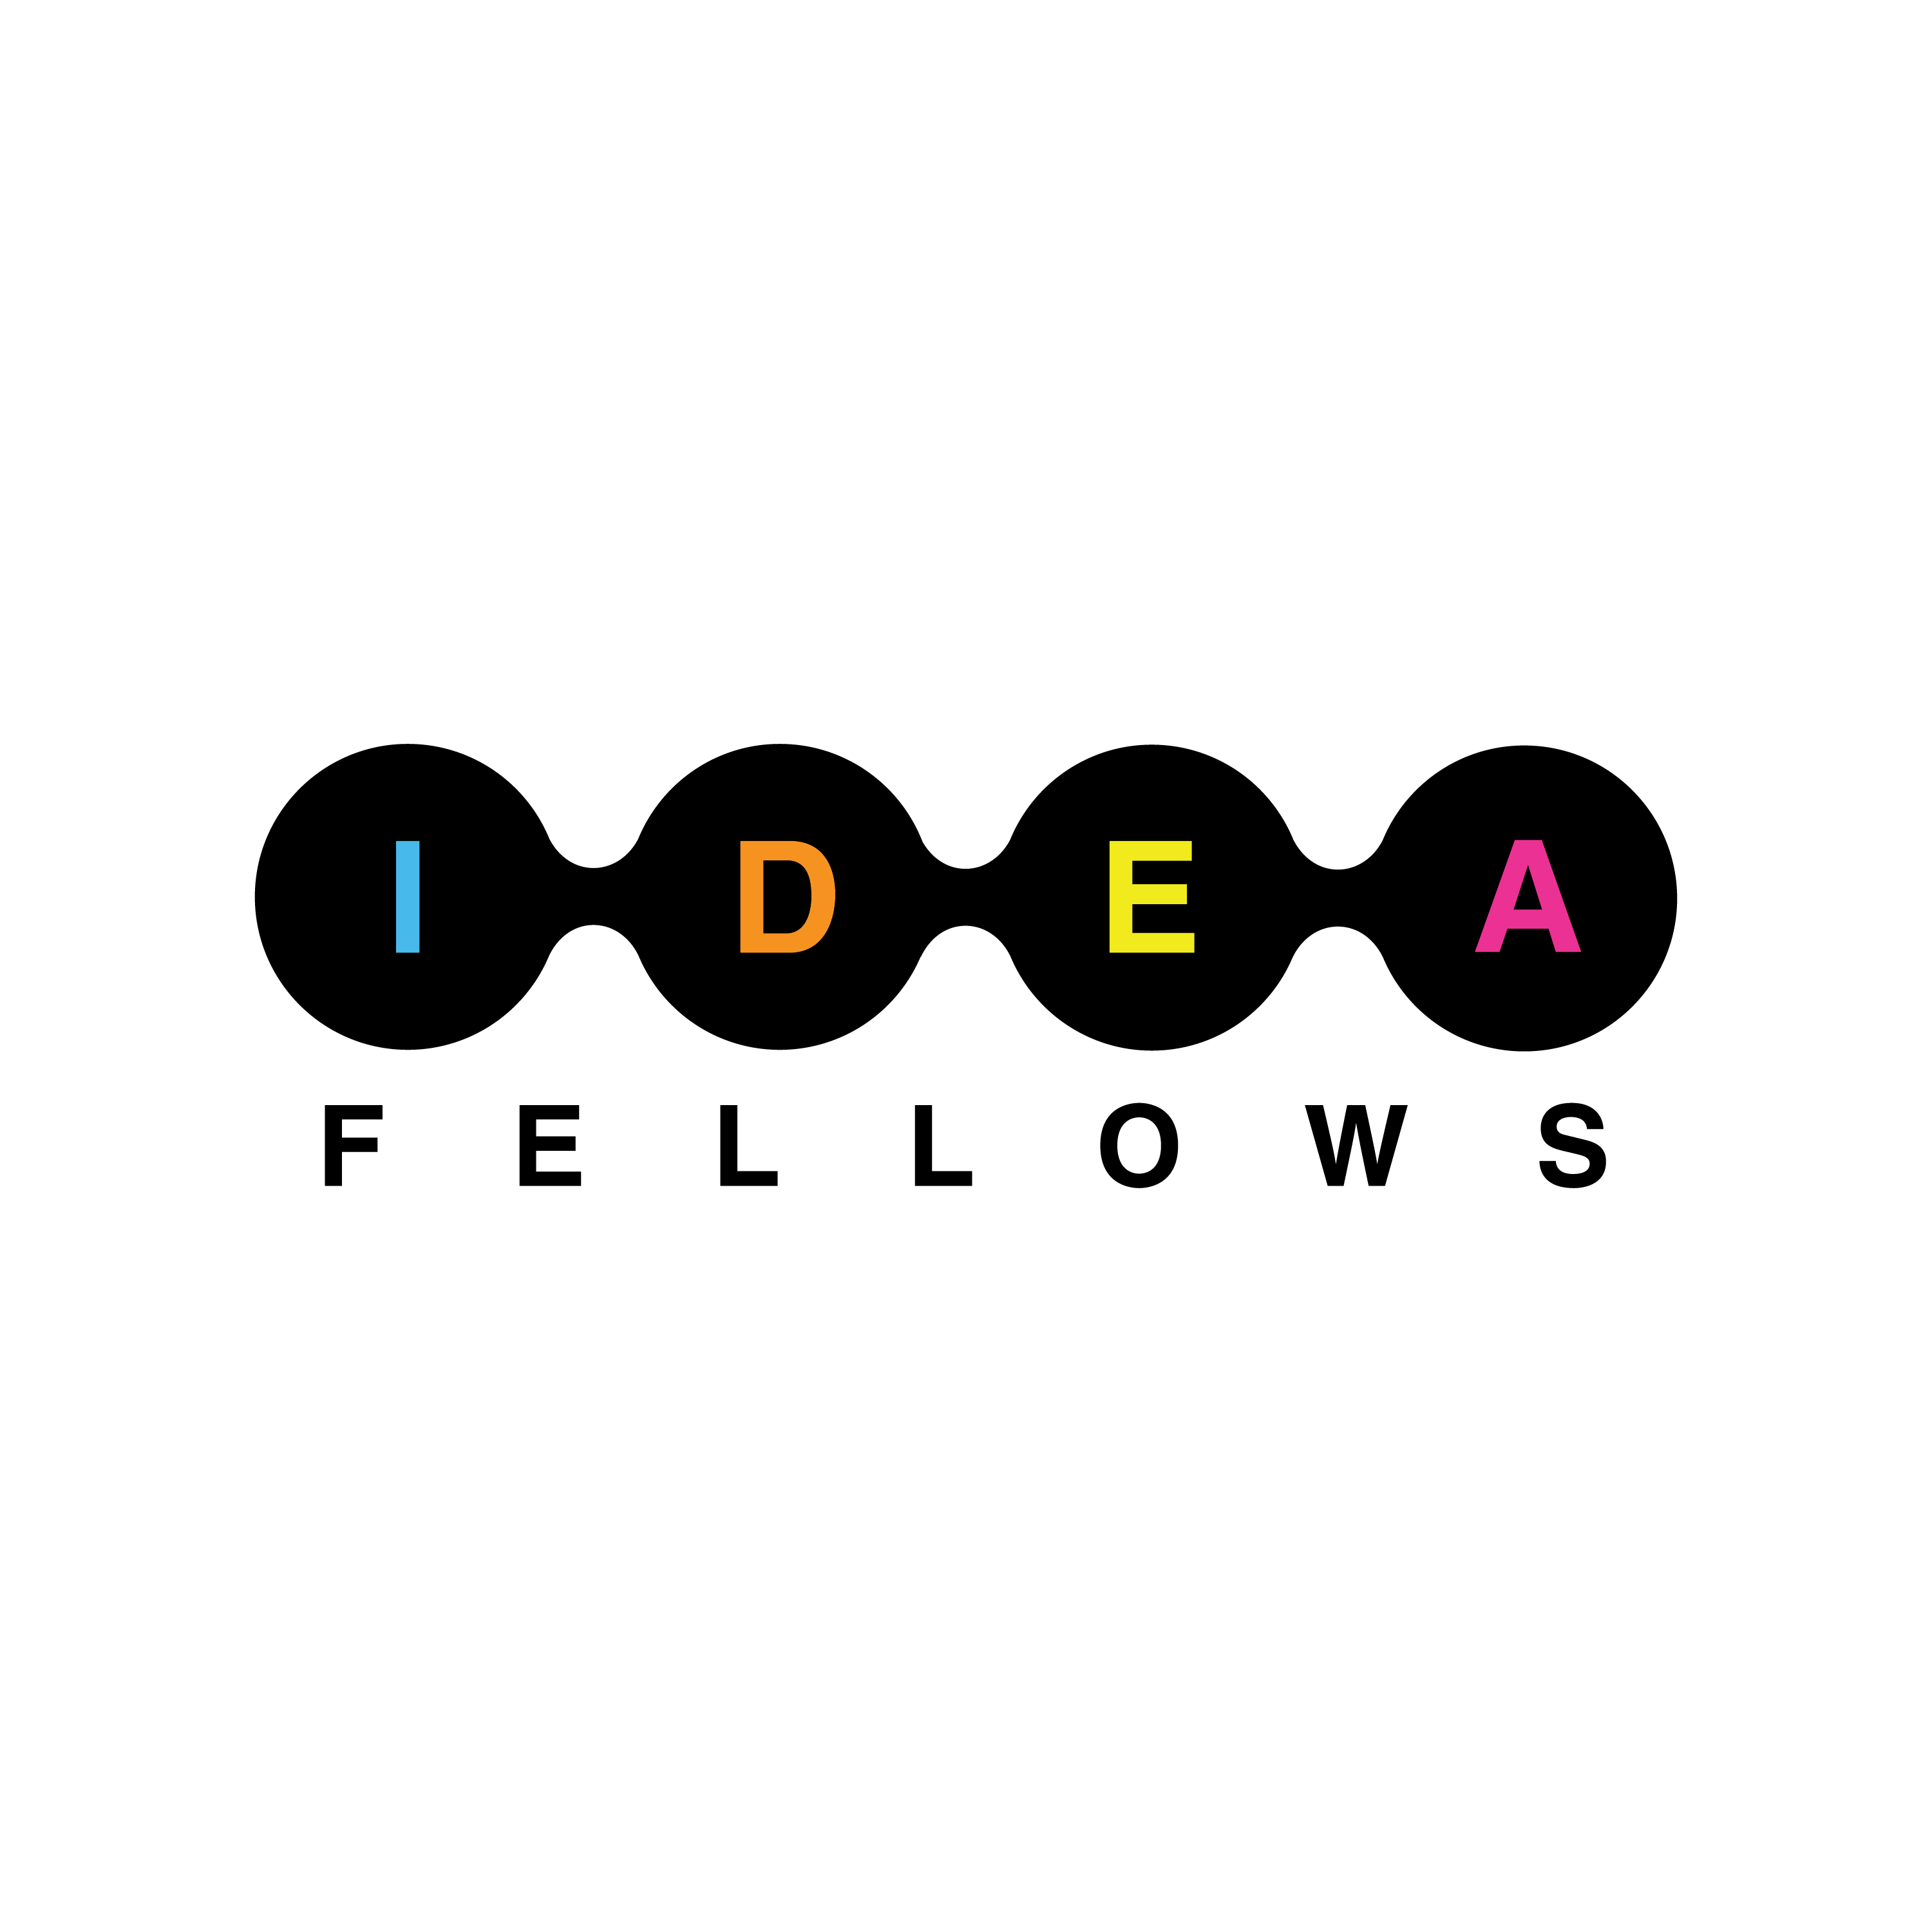 IDEA Fellows Primary Logo.png